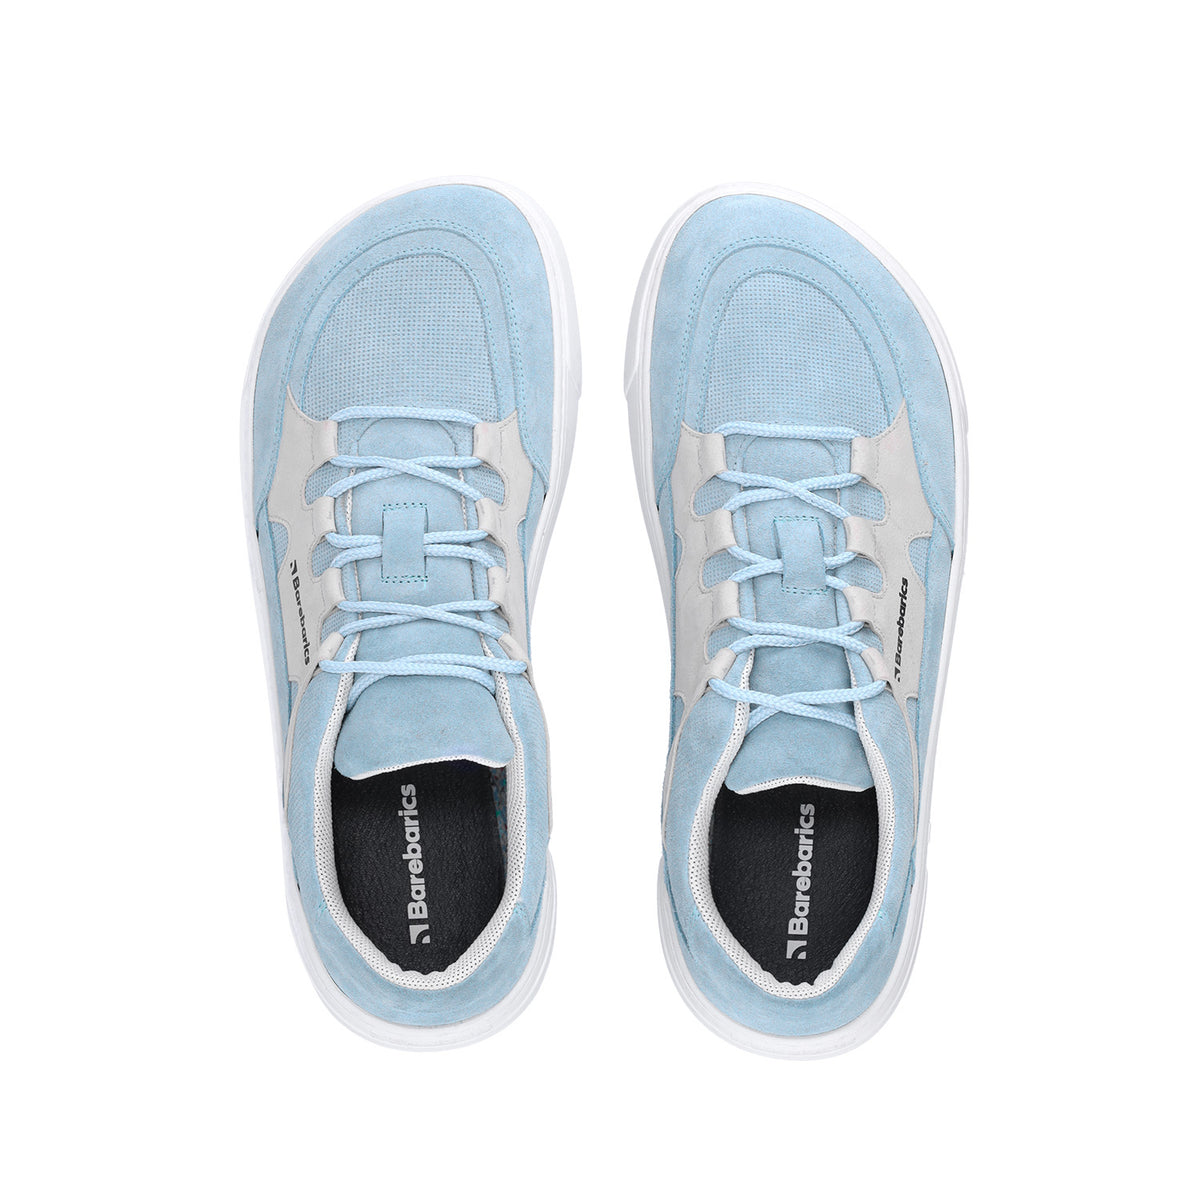 Barefoot Sneakers Barebarics Evo - Light Blue & White 4 OzBarefoot Australia